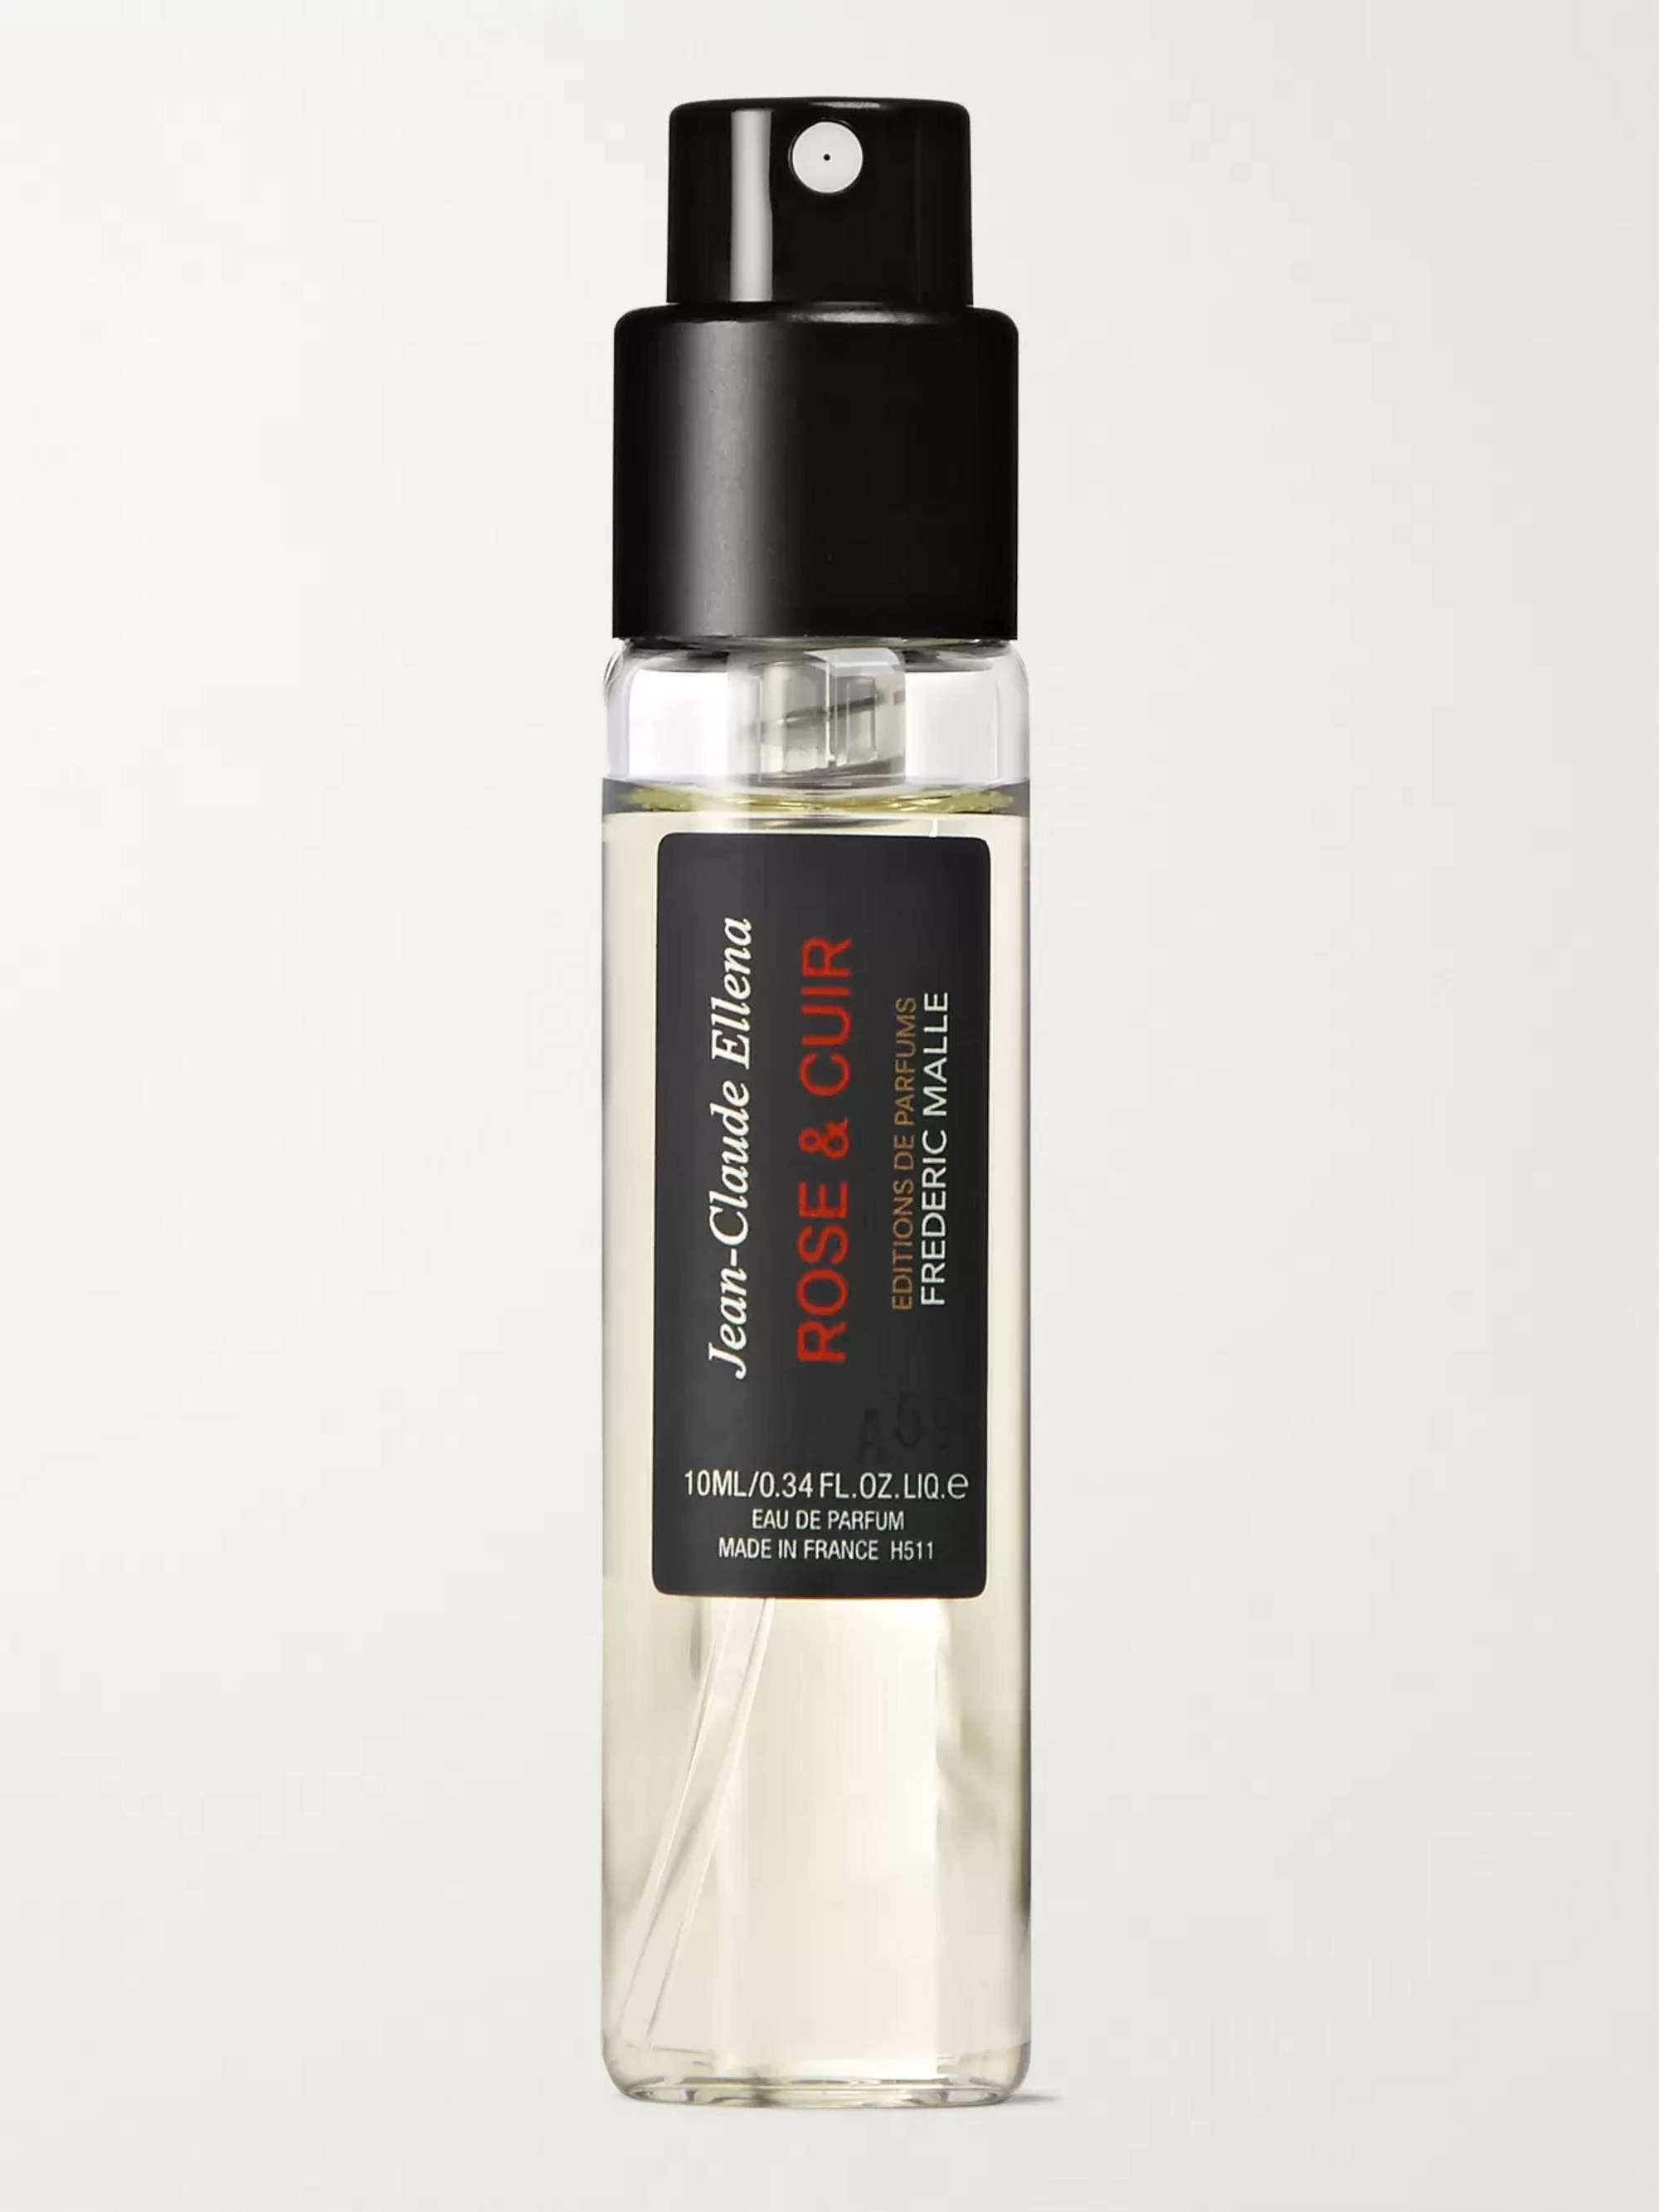 Frederic Malle Rose & Cuir Eau de Parfum, 10ml